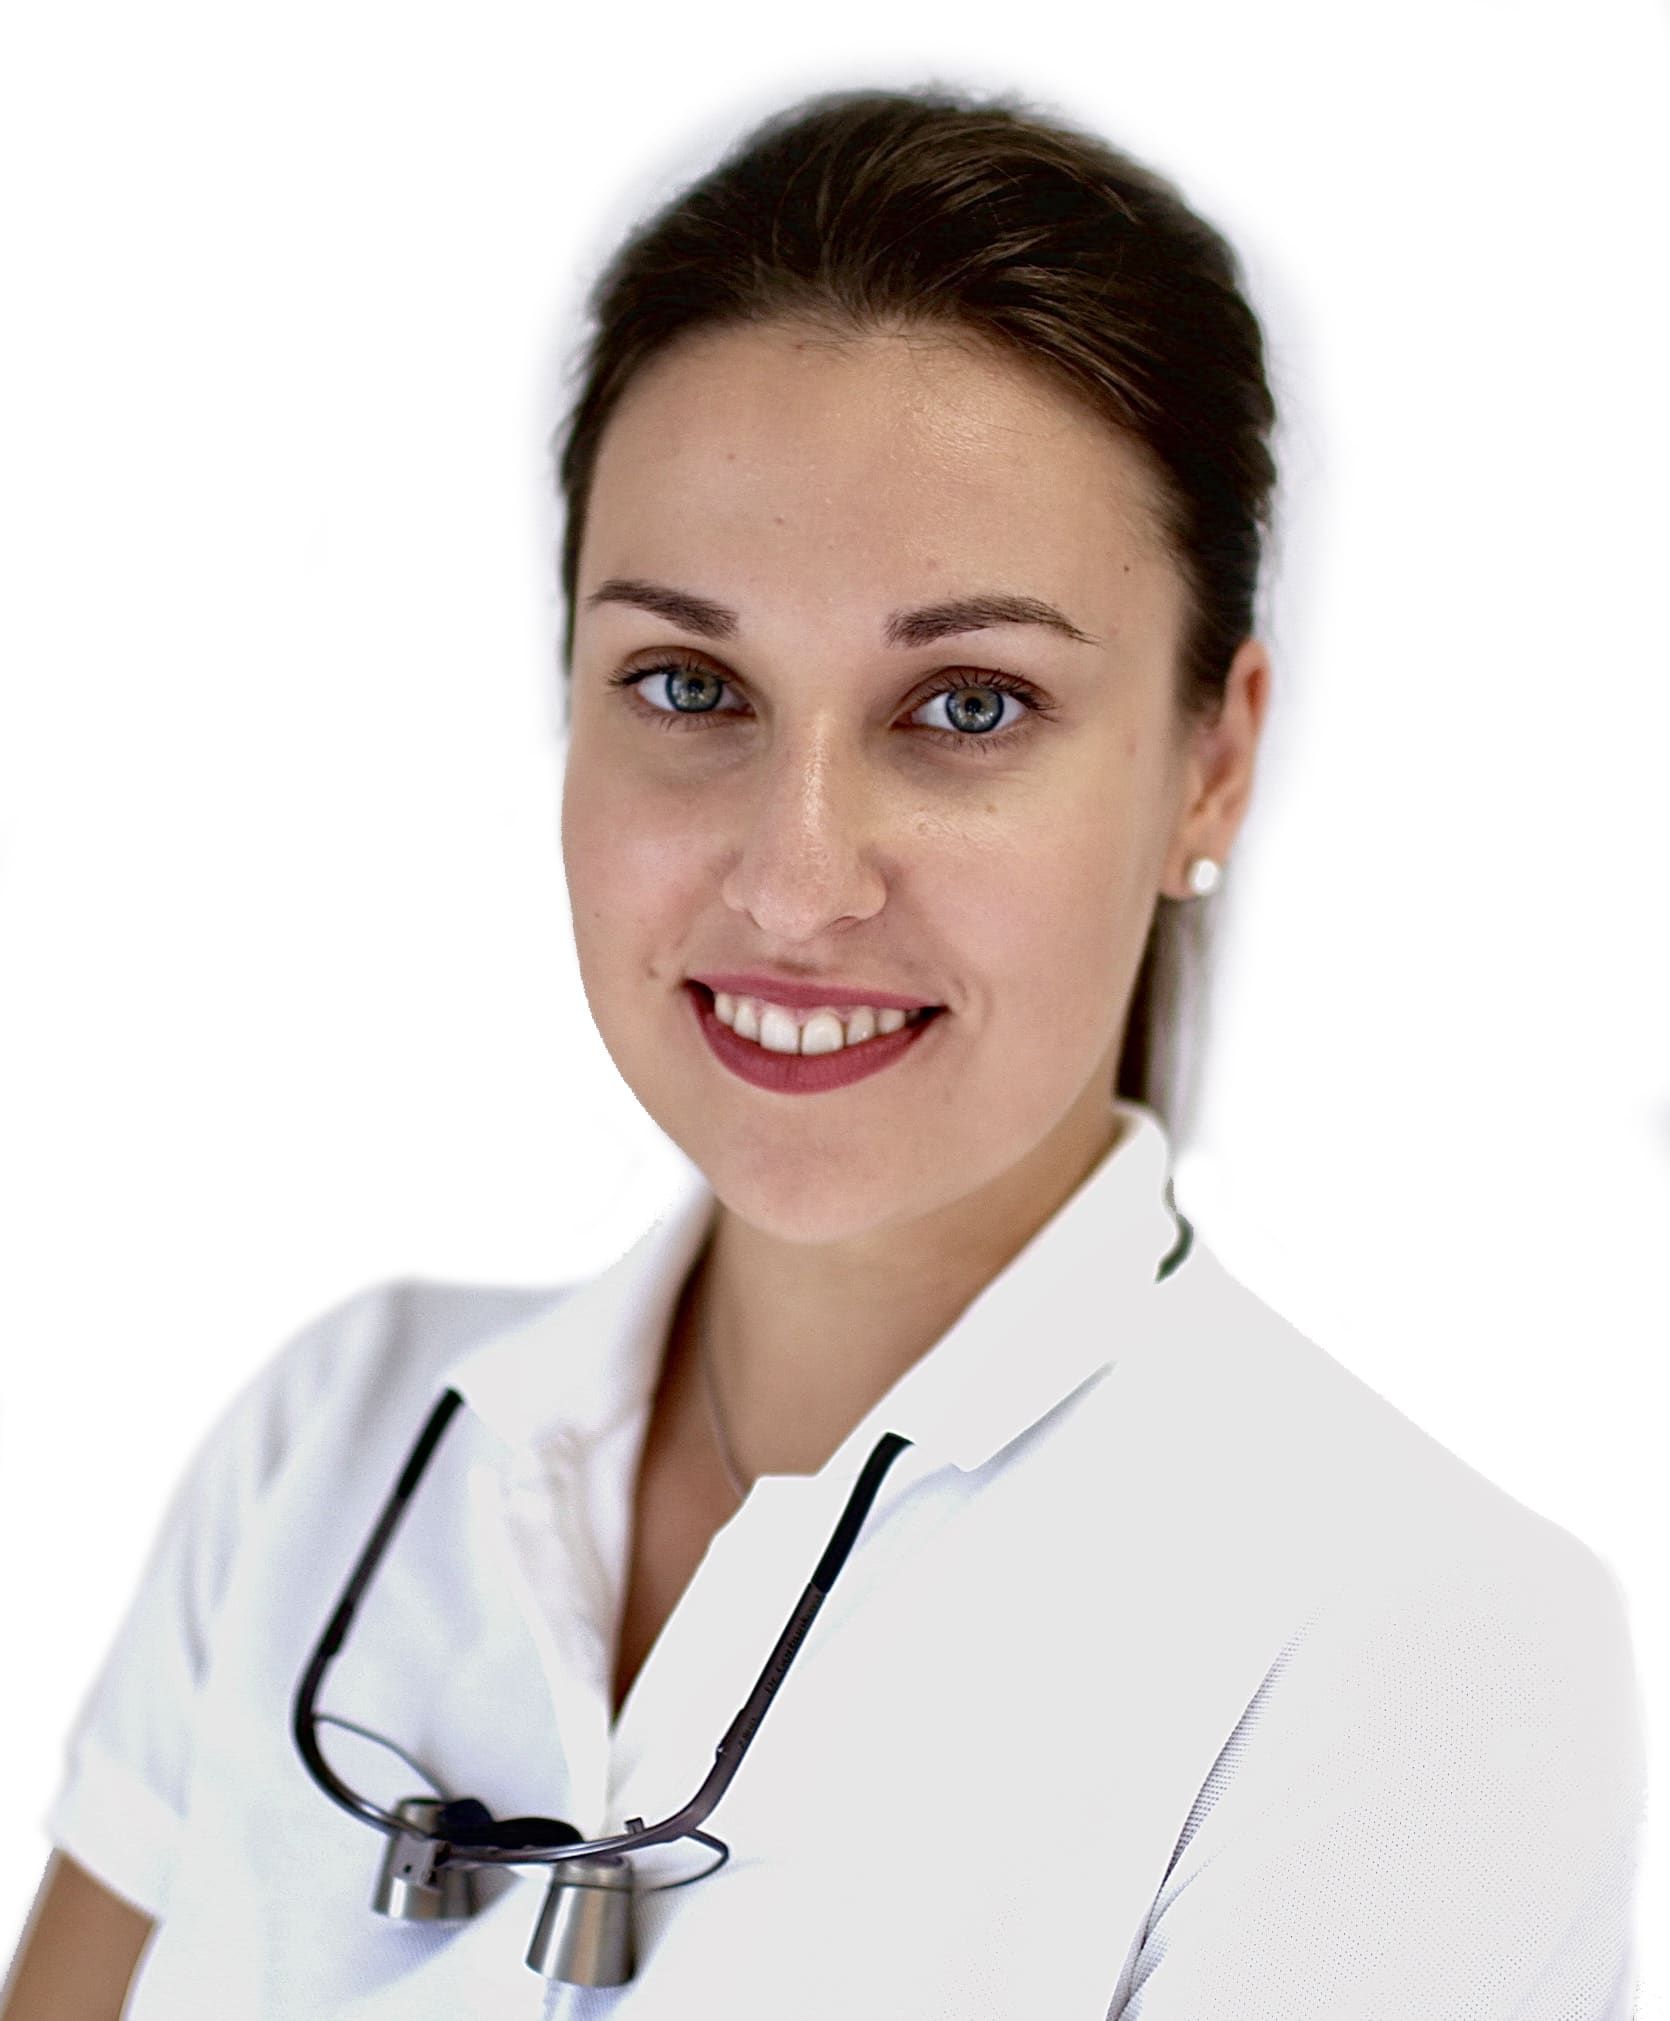 Angelina Gorbunkova courses perio periodontology for hygienists cosri parodontologia per gli igienisti